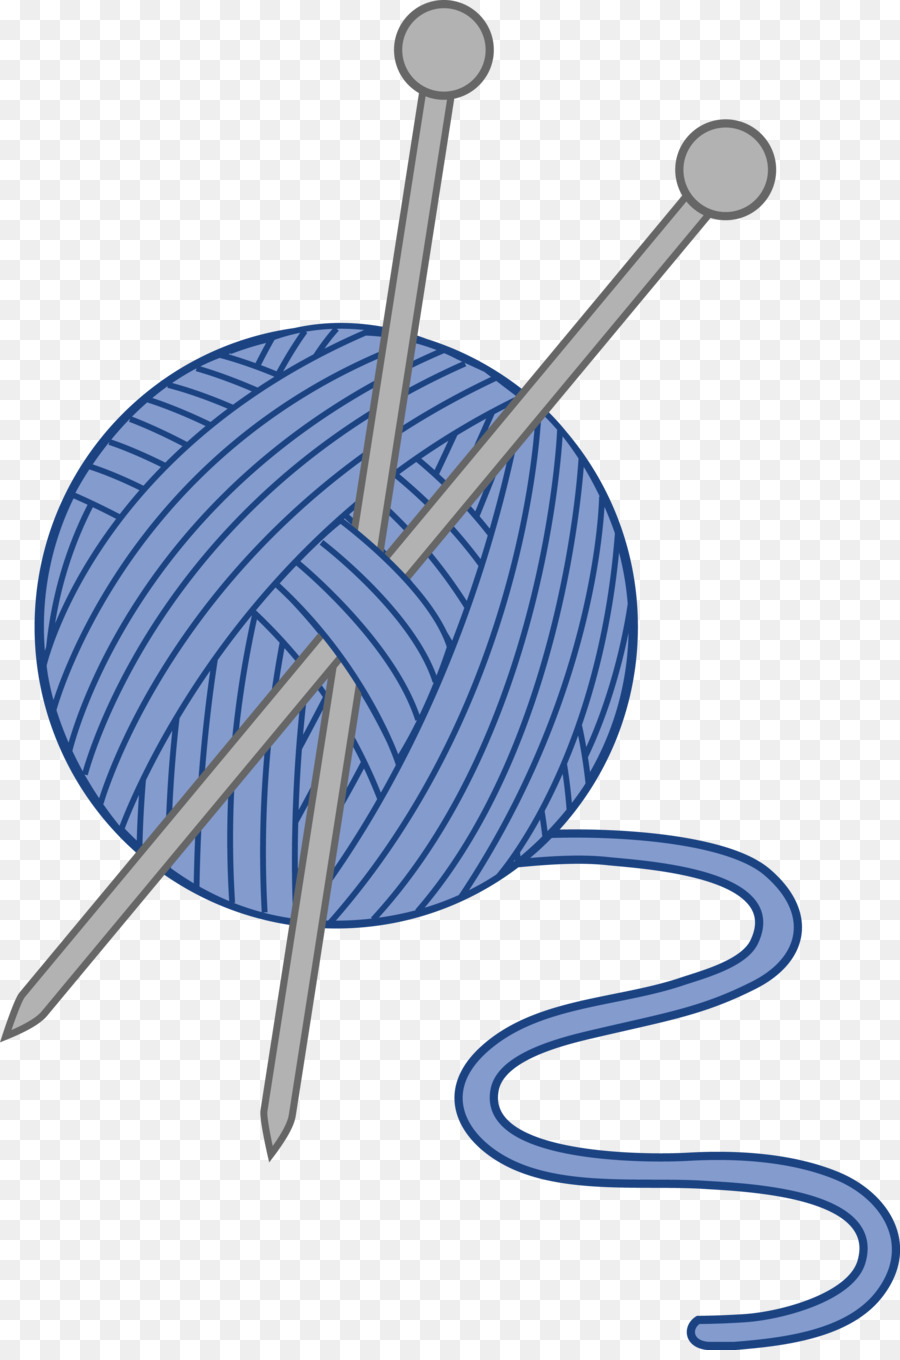 Clipart knitting needles and yarn